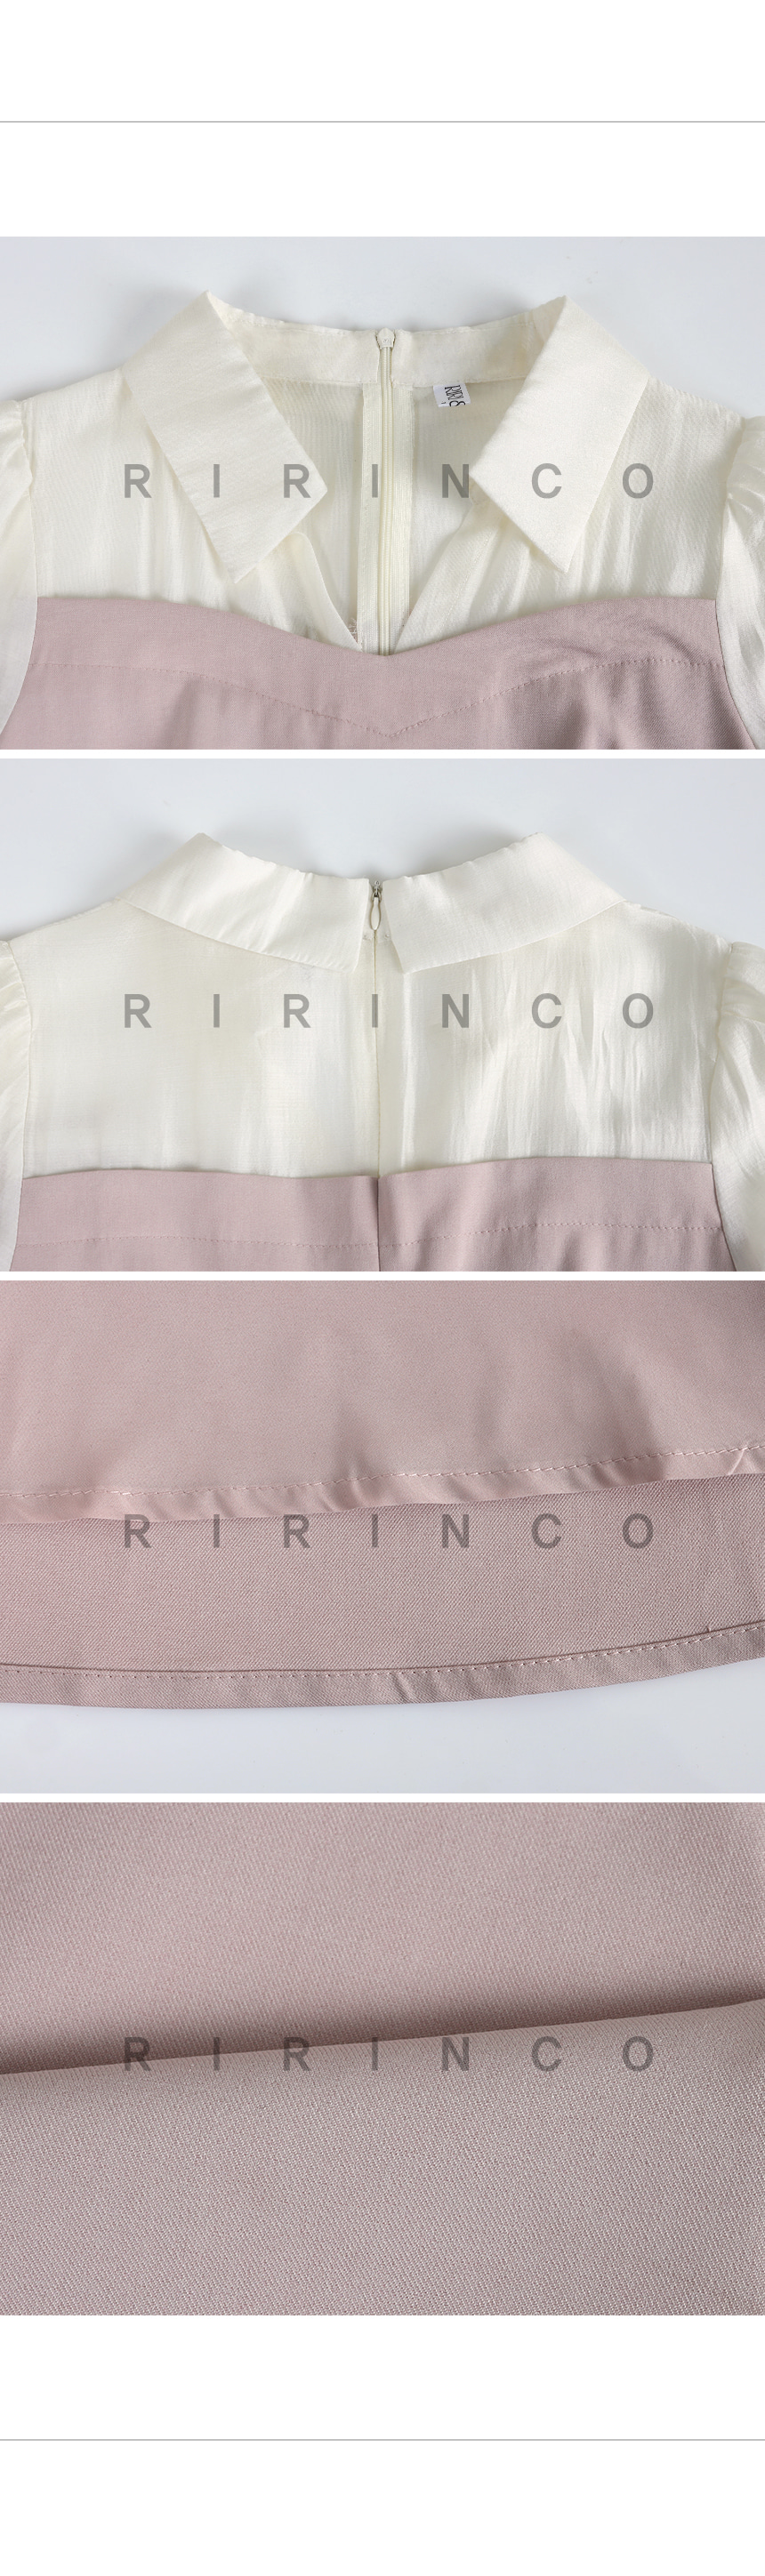 RIRINCO オープンカラーシースルー配色ワンピース 